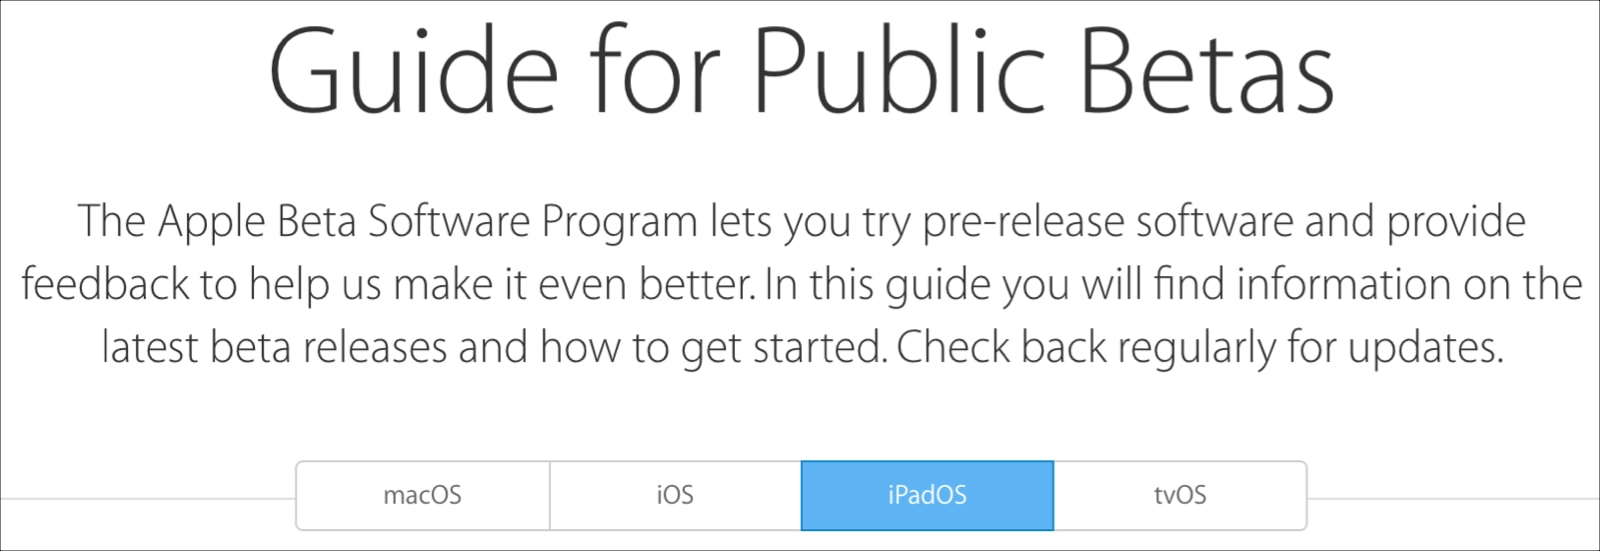 Apple Guide for Public Betas